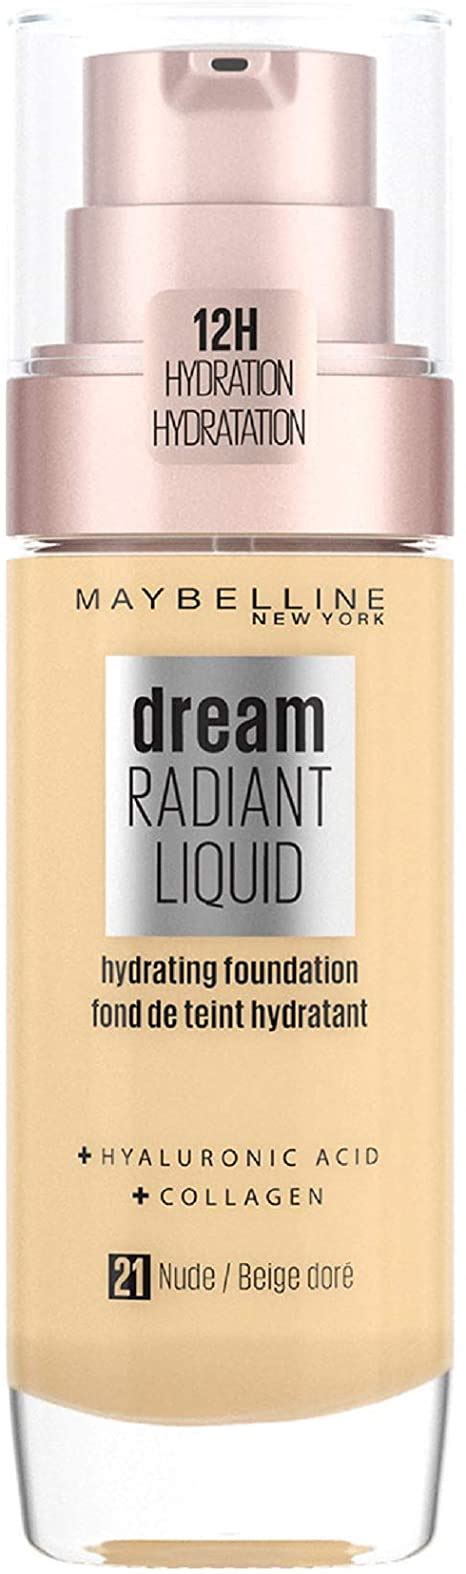 Maybelline New York Dream Satin Liquid Spf13 Face Foundation 1 01 Oz